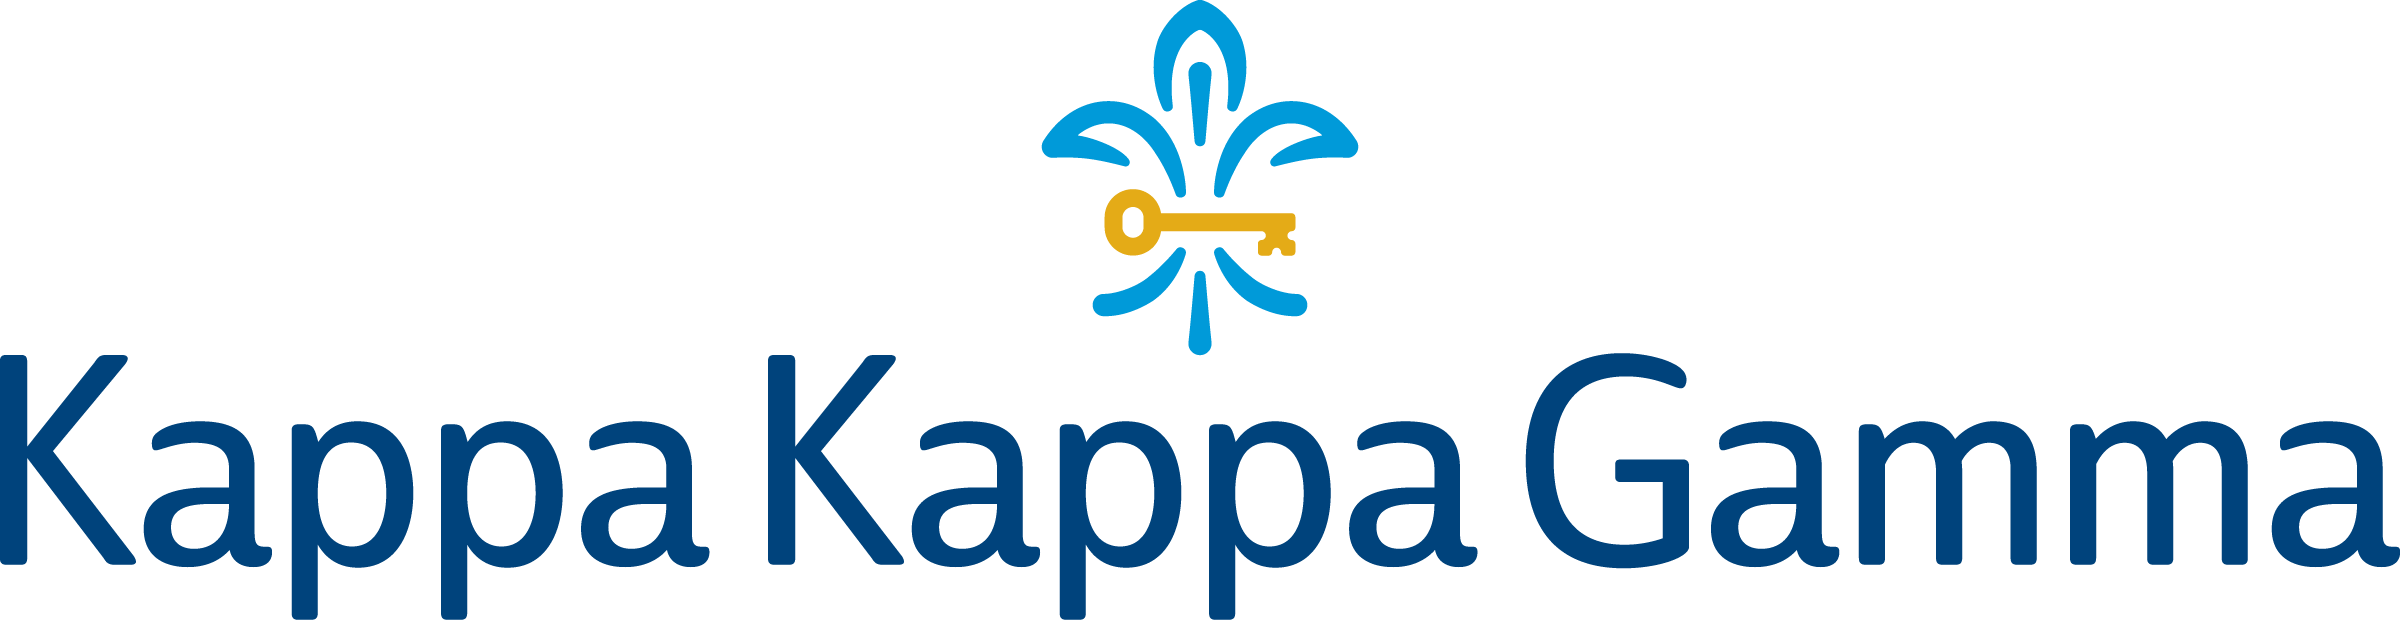 sponsor logo image